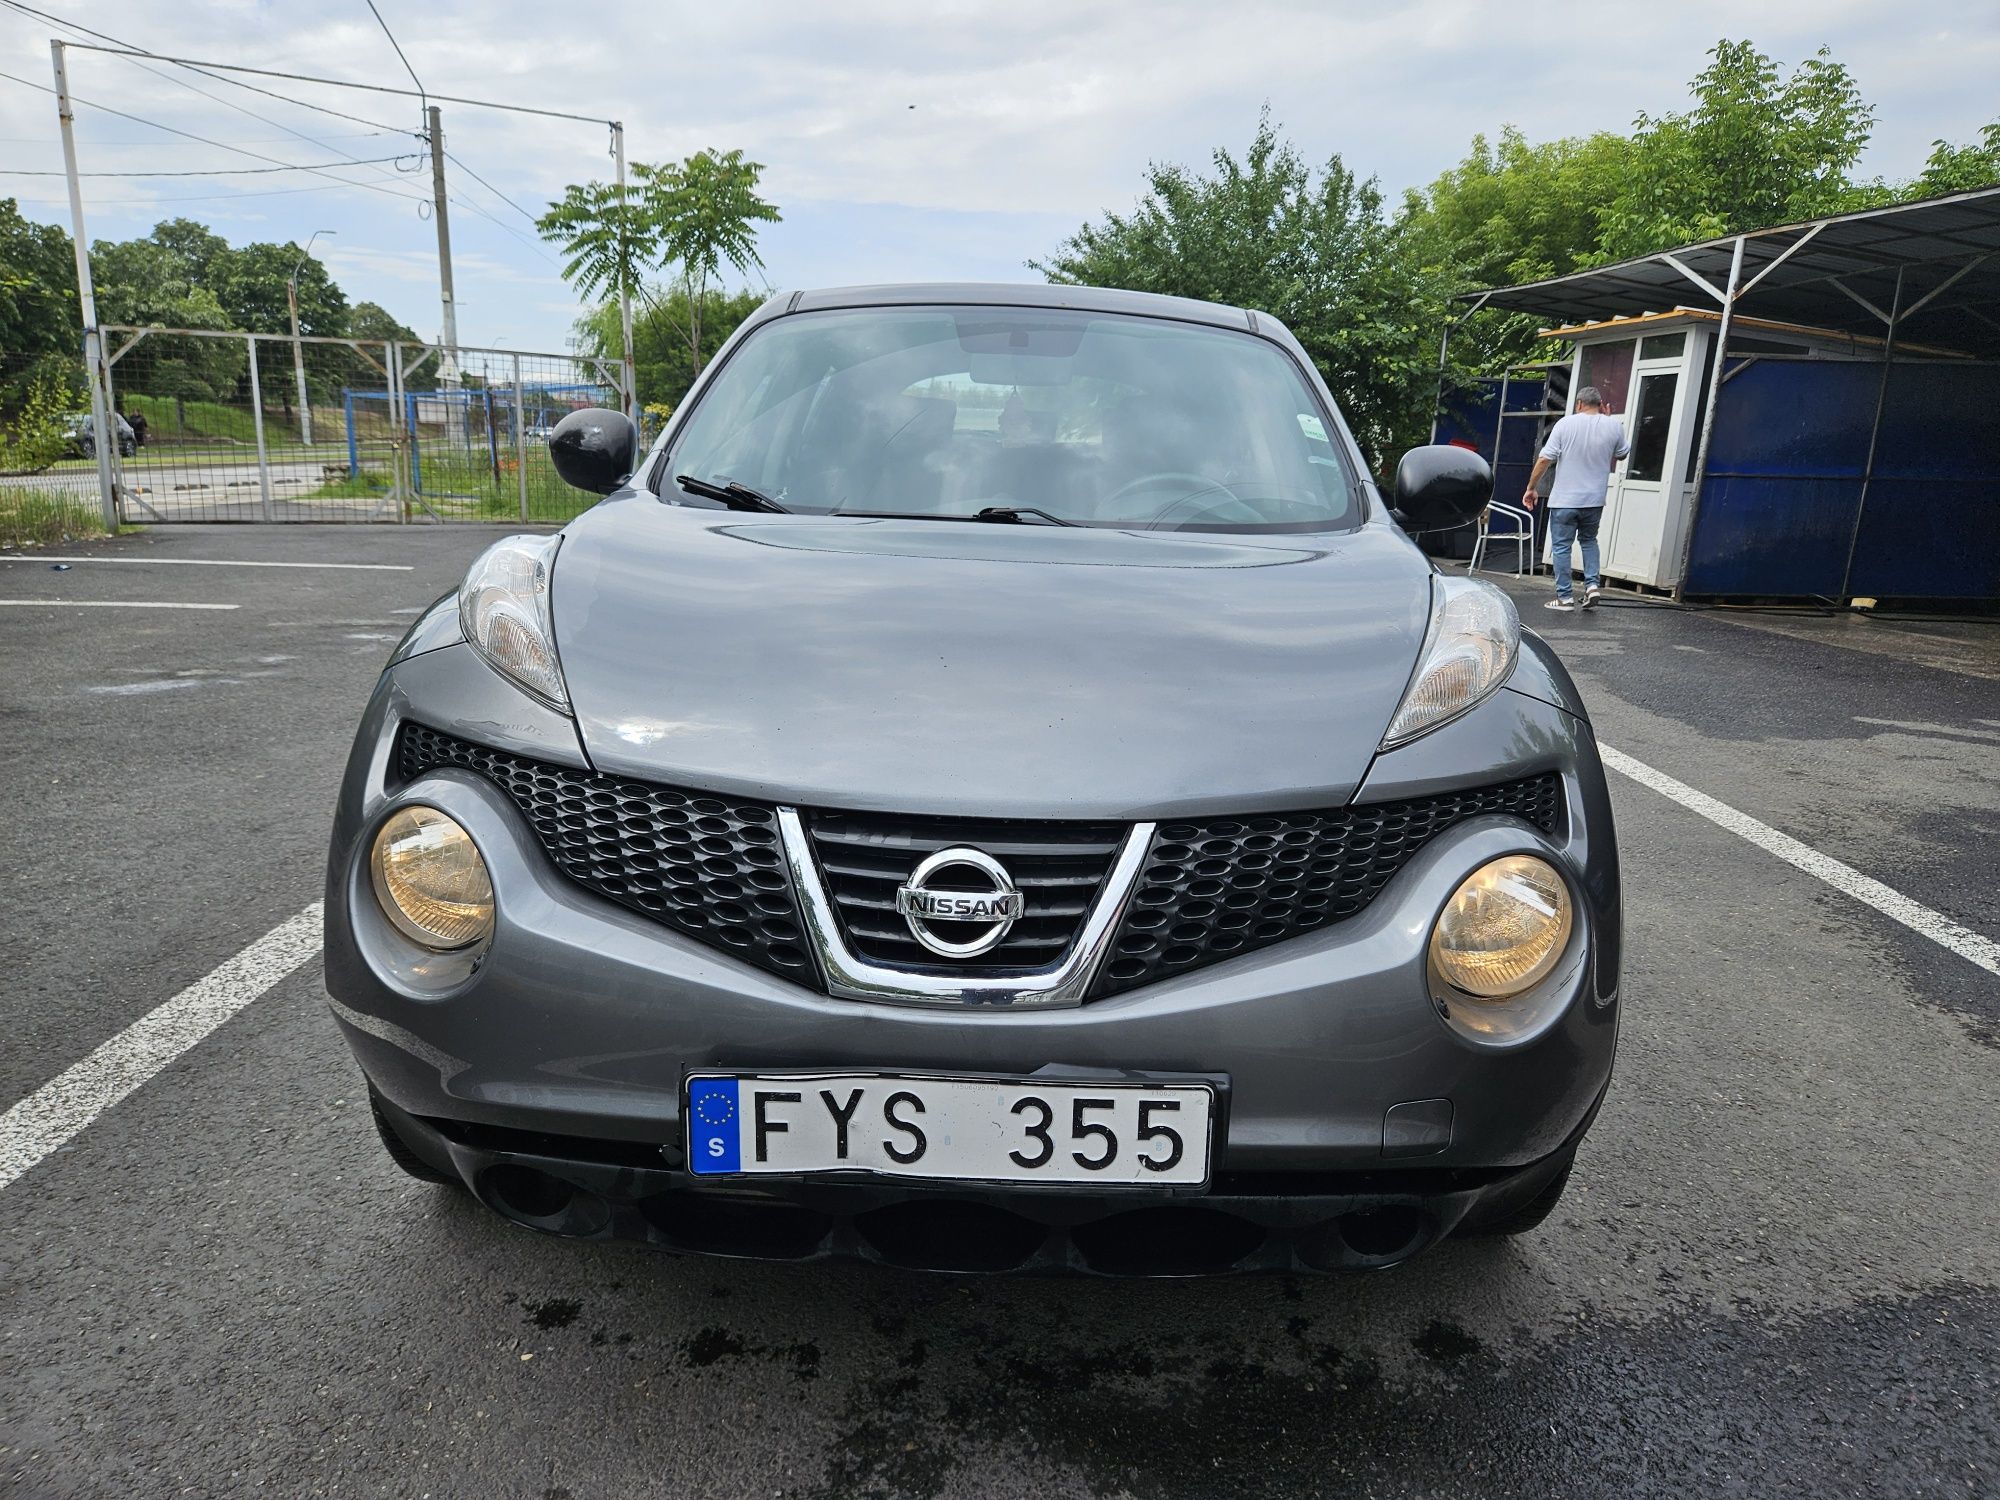 Nissan juke 2011 euro5